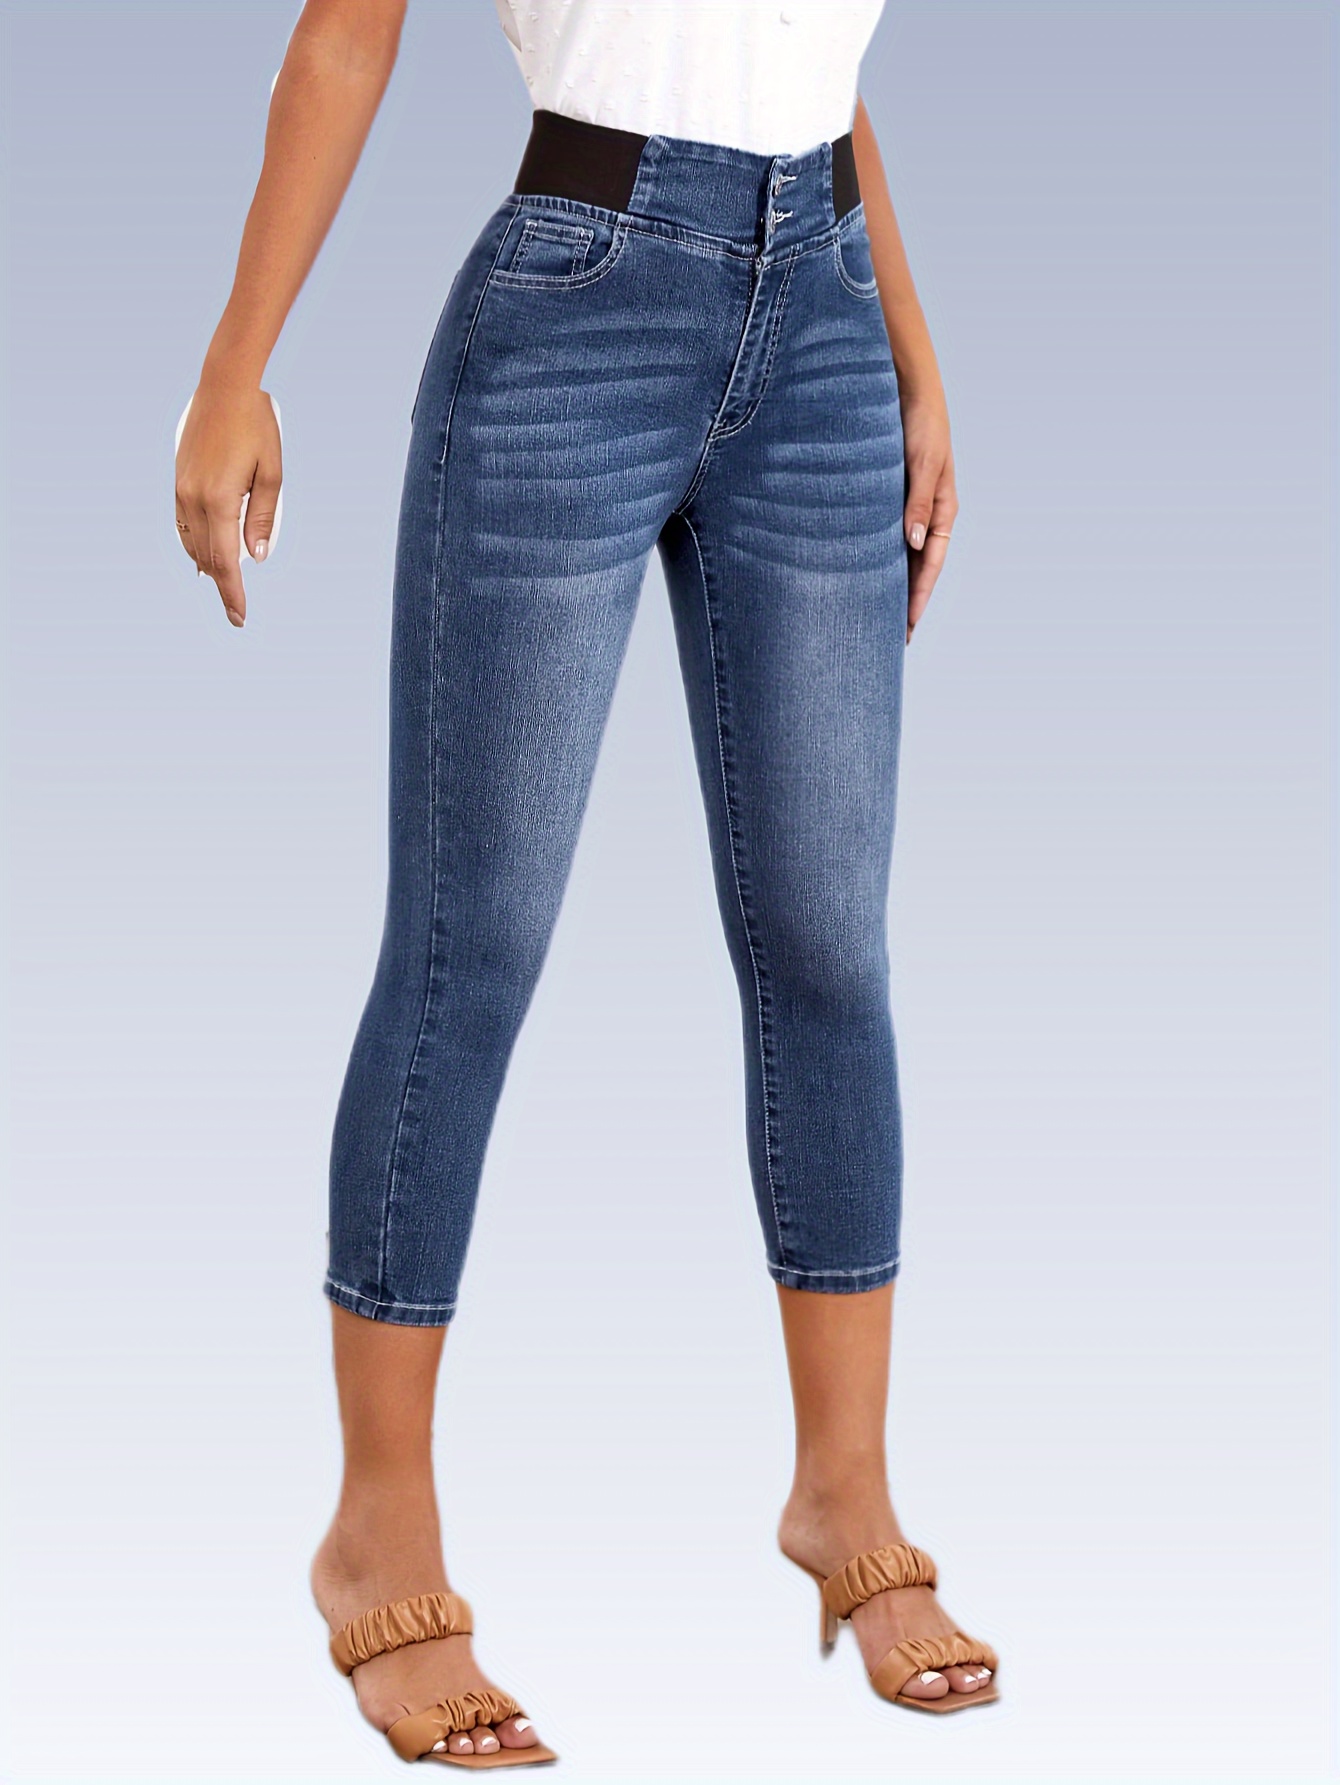 Slant Pocket Slim Fitted Capris Pants, Plicated Pattern High Stretch Casual  Denim Pants, Women's Denim Jeans & Clothing